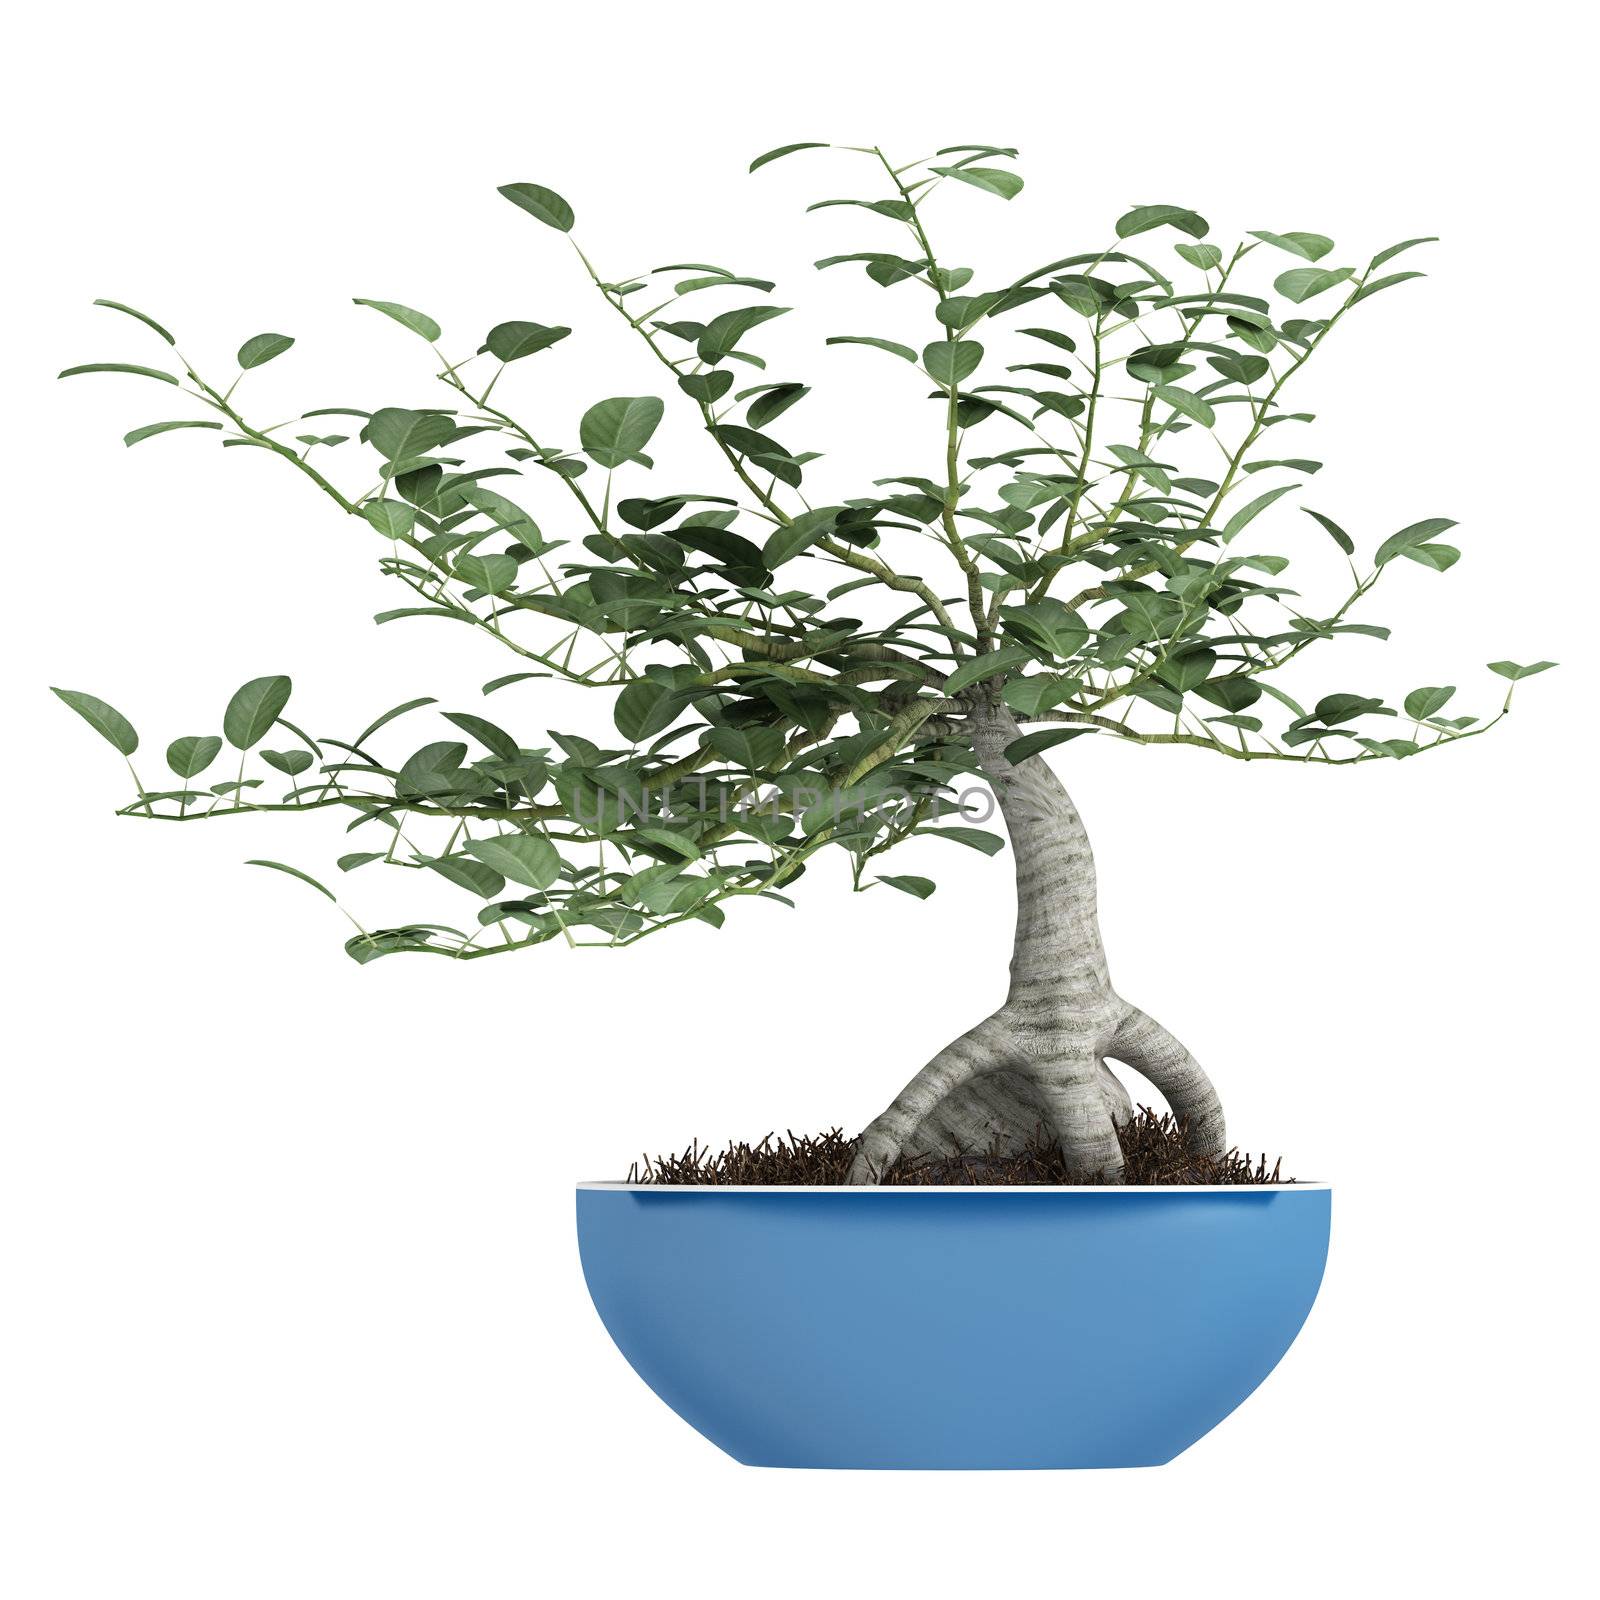 Bonsai tree in a pot by AlexanderMorozov